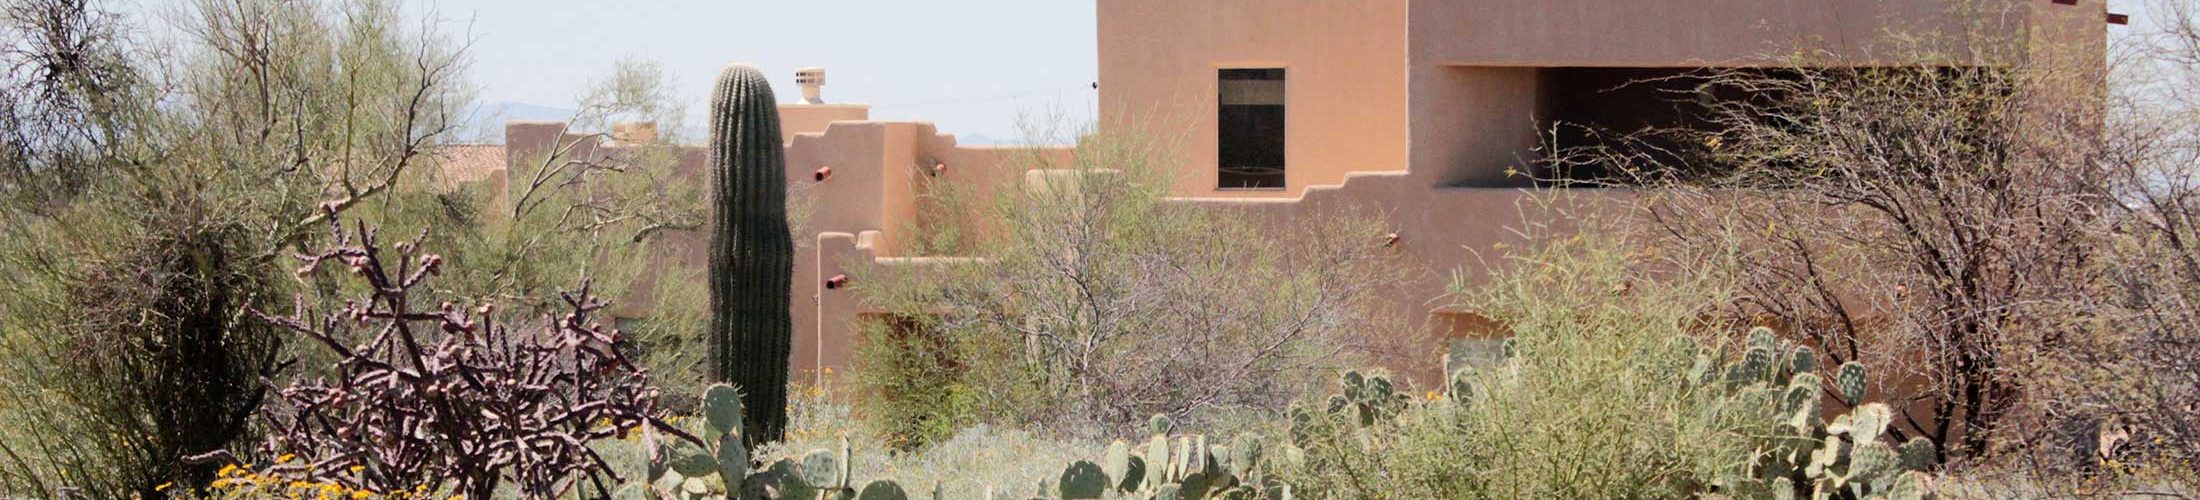 house in Arizona with cactus